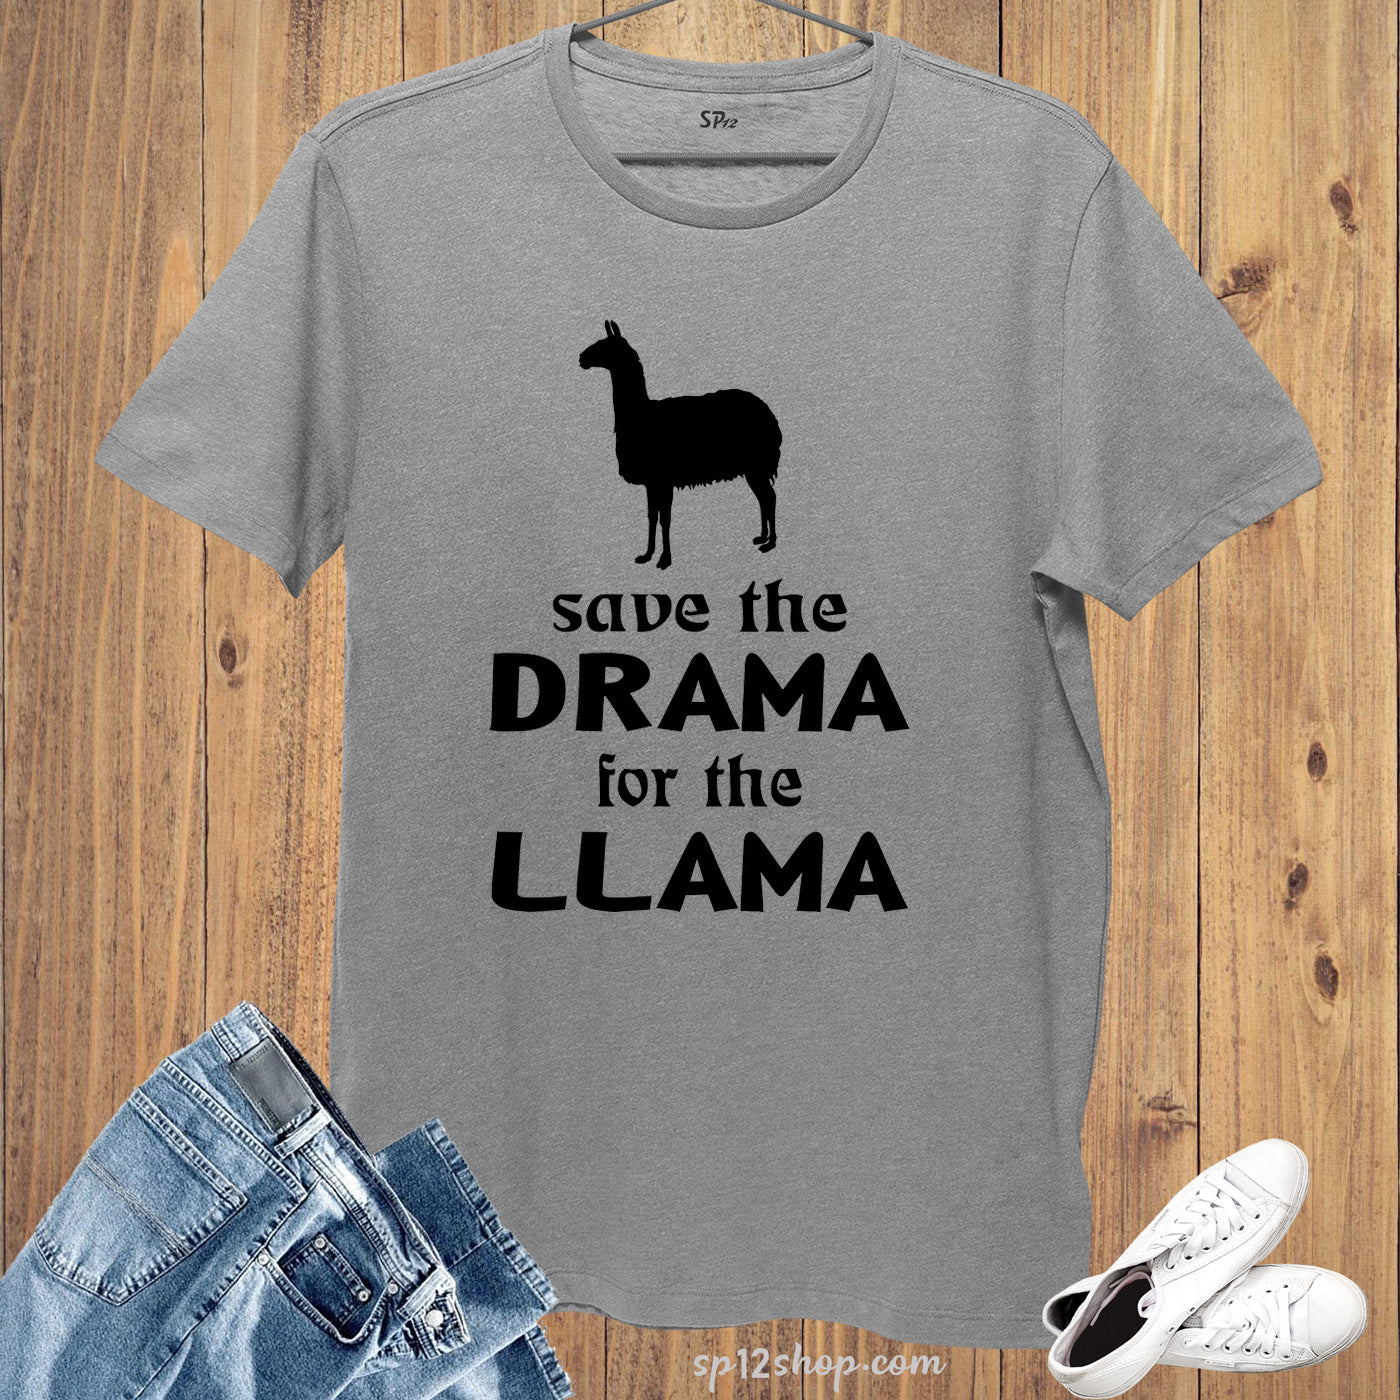 Save The Drama For The Llama Funny Slogan T shirt